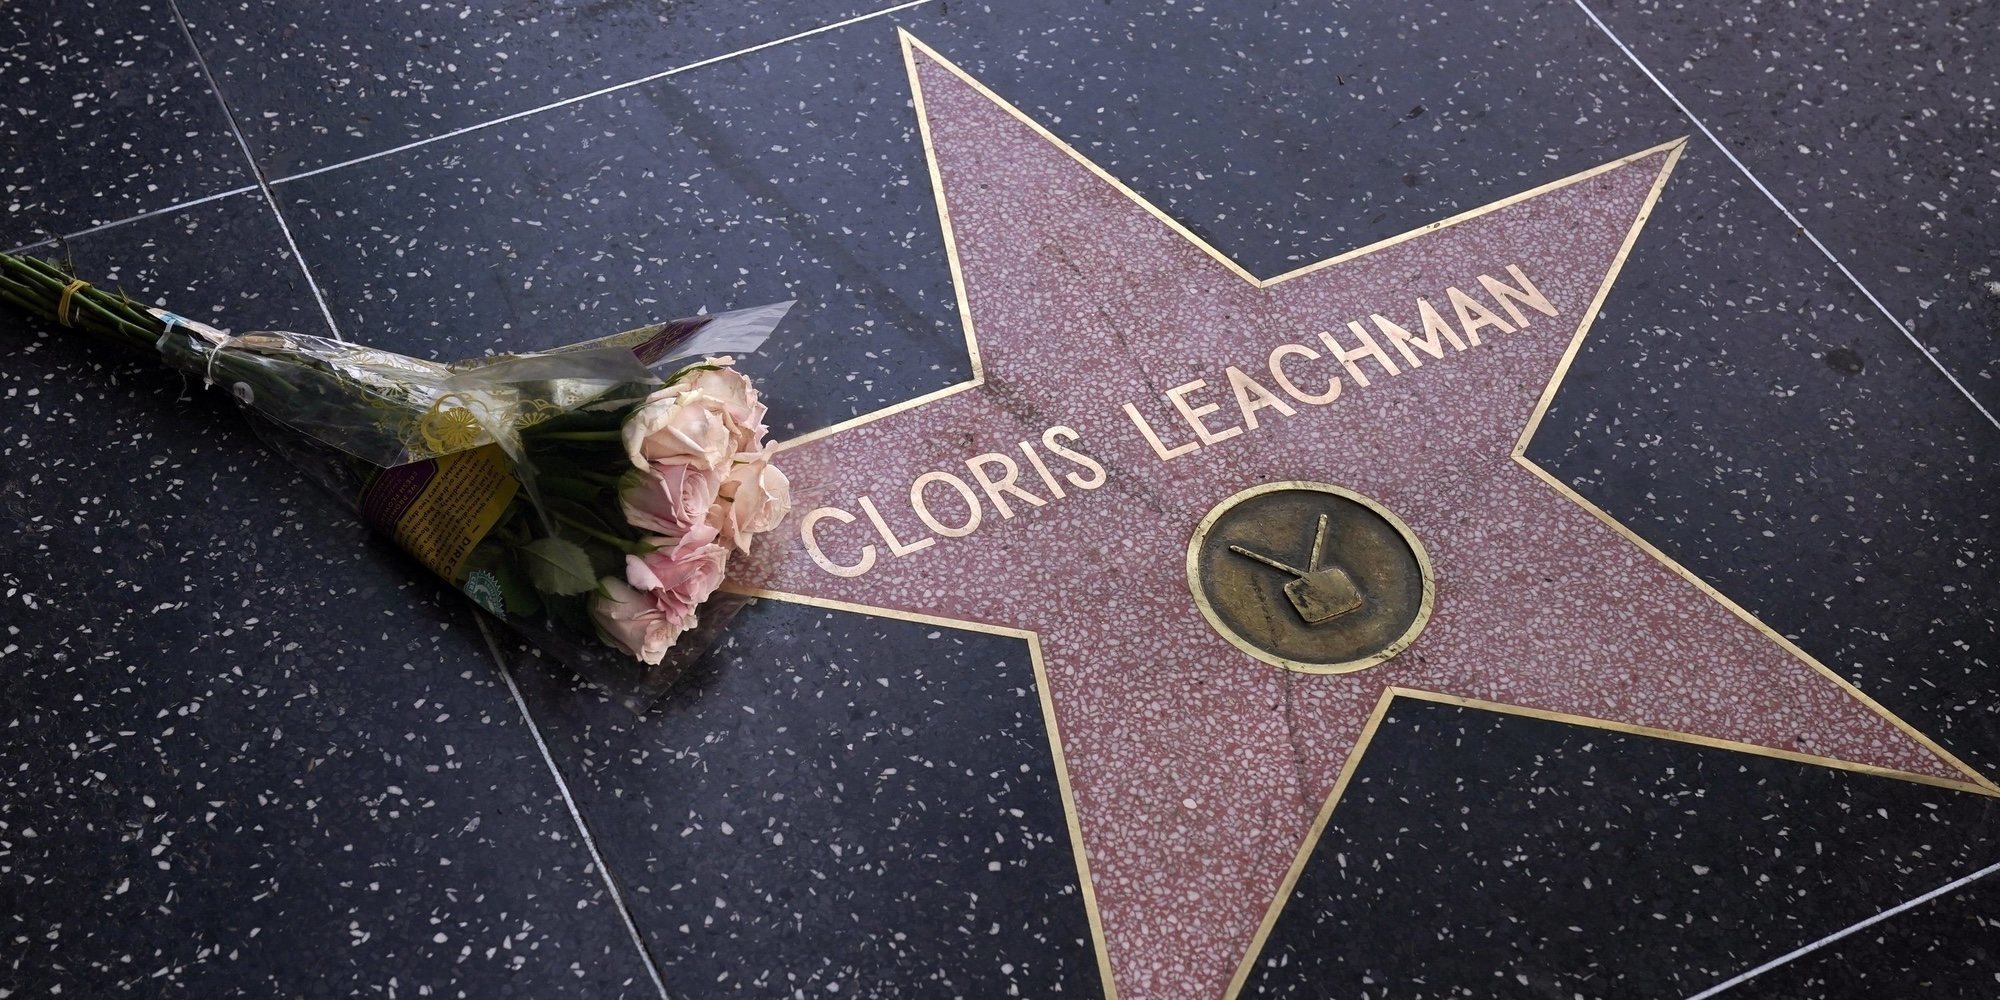 Muere Cloris Leachman ('Malcolm in the middle') a los 94 años